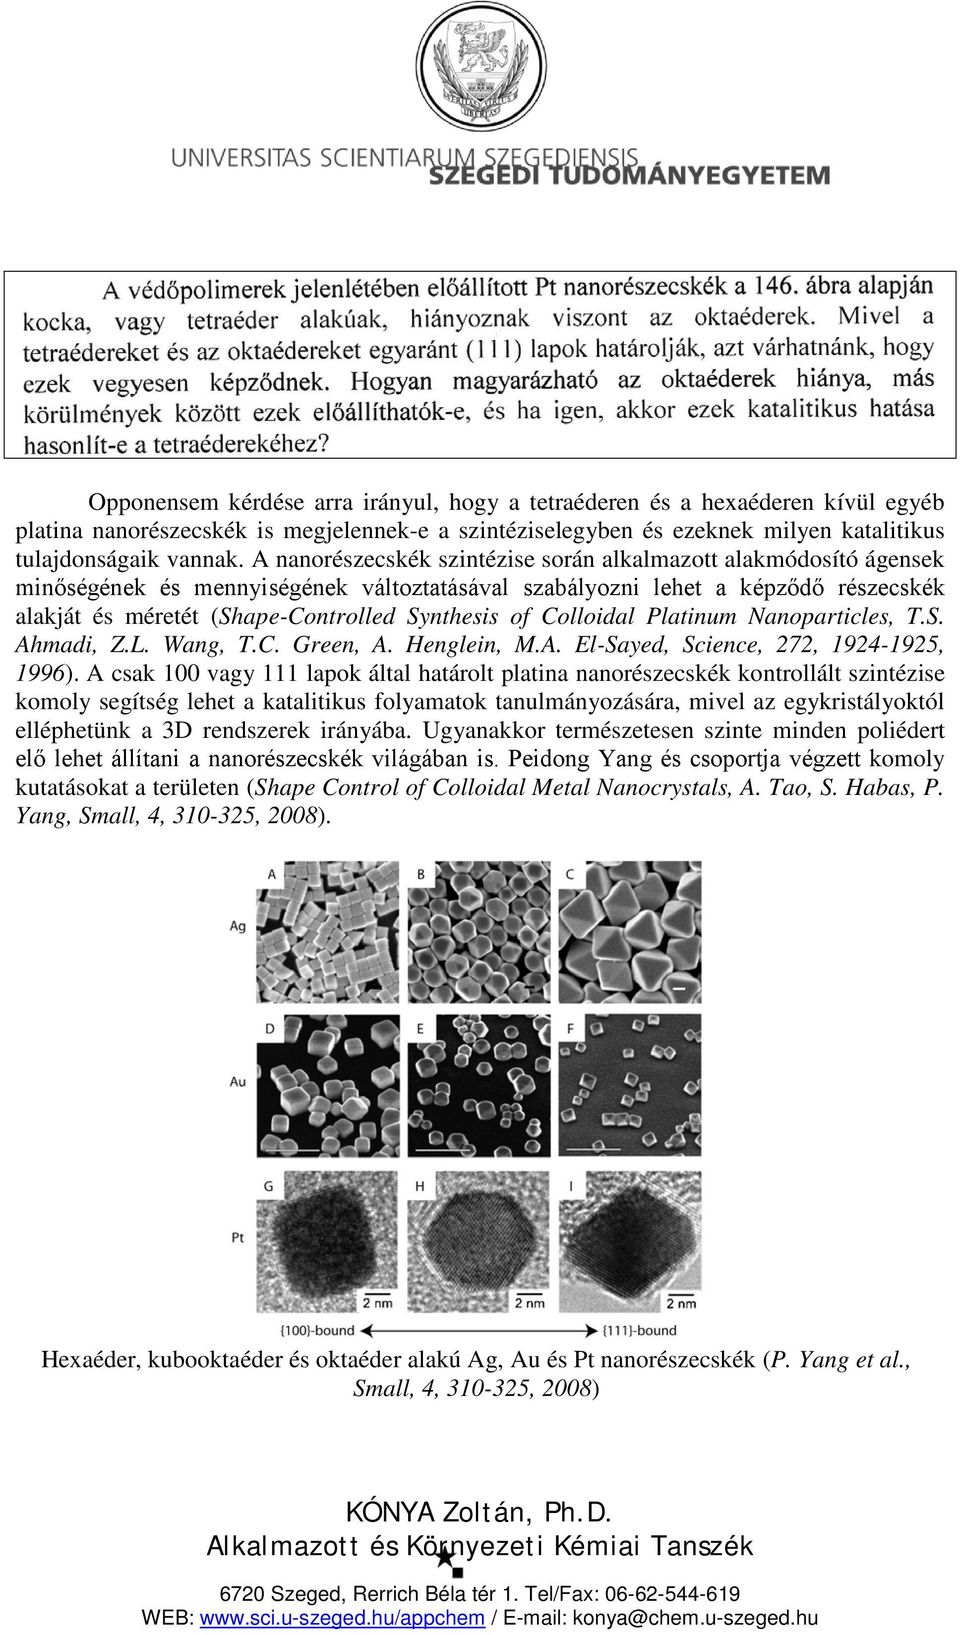 of Colloidal Platinum Nanoparticles, T.S. Ahmadi, Z.L. Wang, T.C. Green, A. Henglein, M.A. El-Sayed, Science, 272, 1924-1925, 1996).